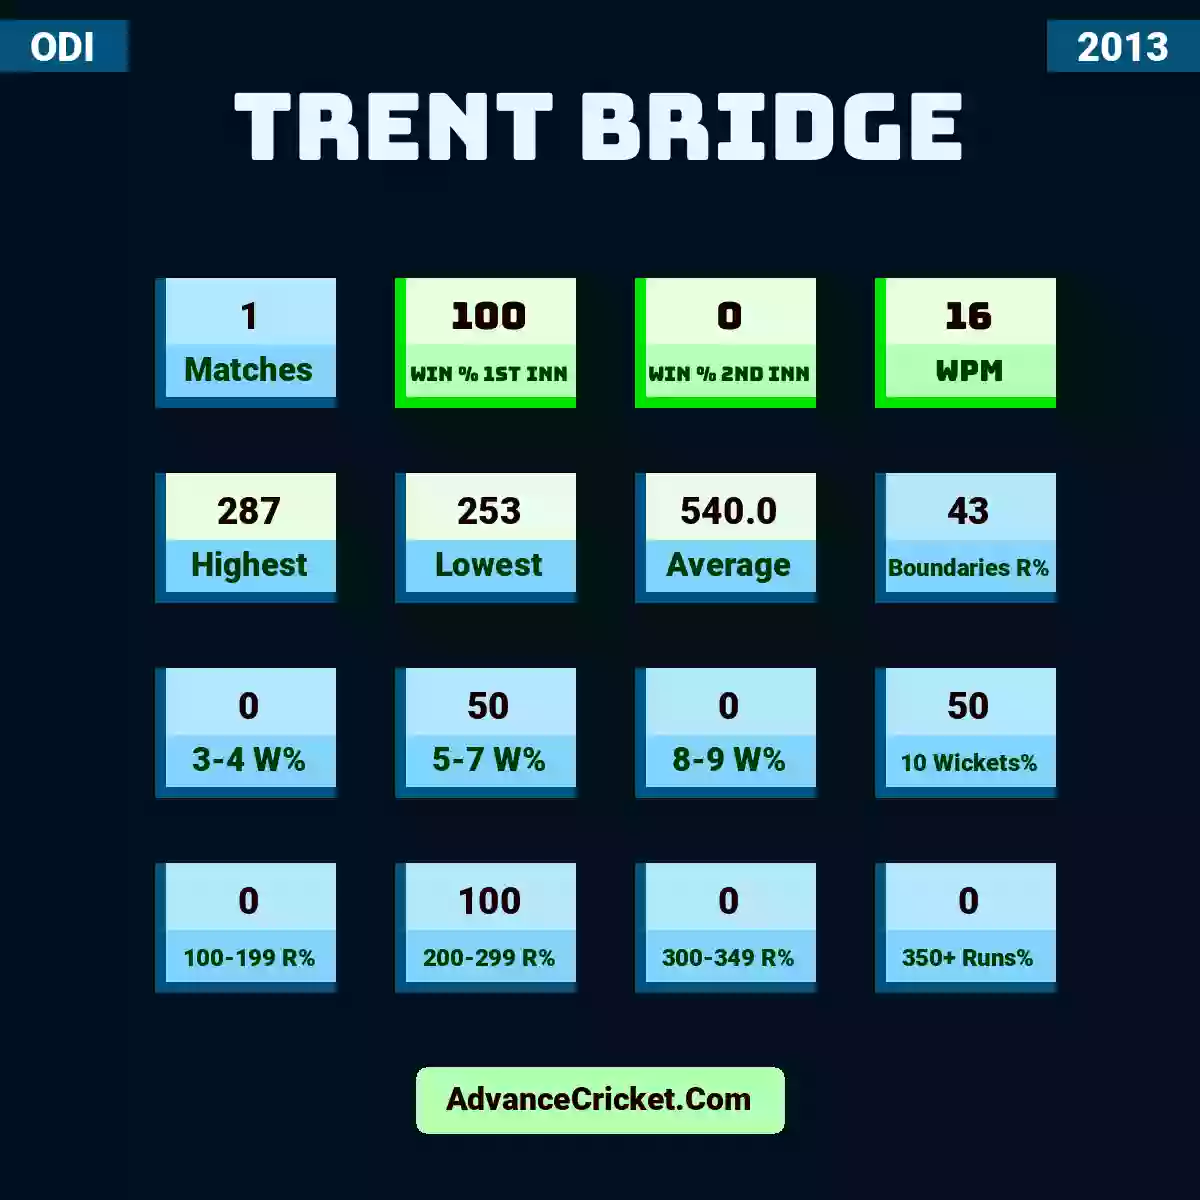 Image showing Trent Bridge with Matches: 1, Win % 1st Inn: 100, Win % 2nd Inn: 0, WPM: 16, Highest: 287, Lowest: 253, Average: 540.0, Boundaries R%: 43, 3-4 W%: 0, 5-7 W%: 50, 8-9 W%: 0, 10 Wickets%: 50, 100-199 R%: 0, 200-299 R%: 100, 300-349 R%: 0, 350+ Runs%: 0.